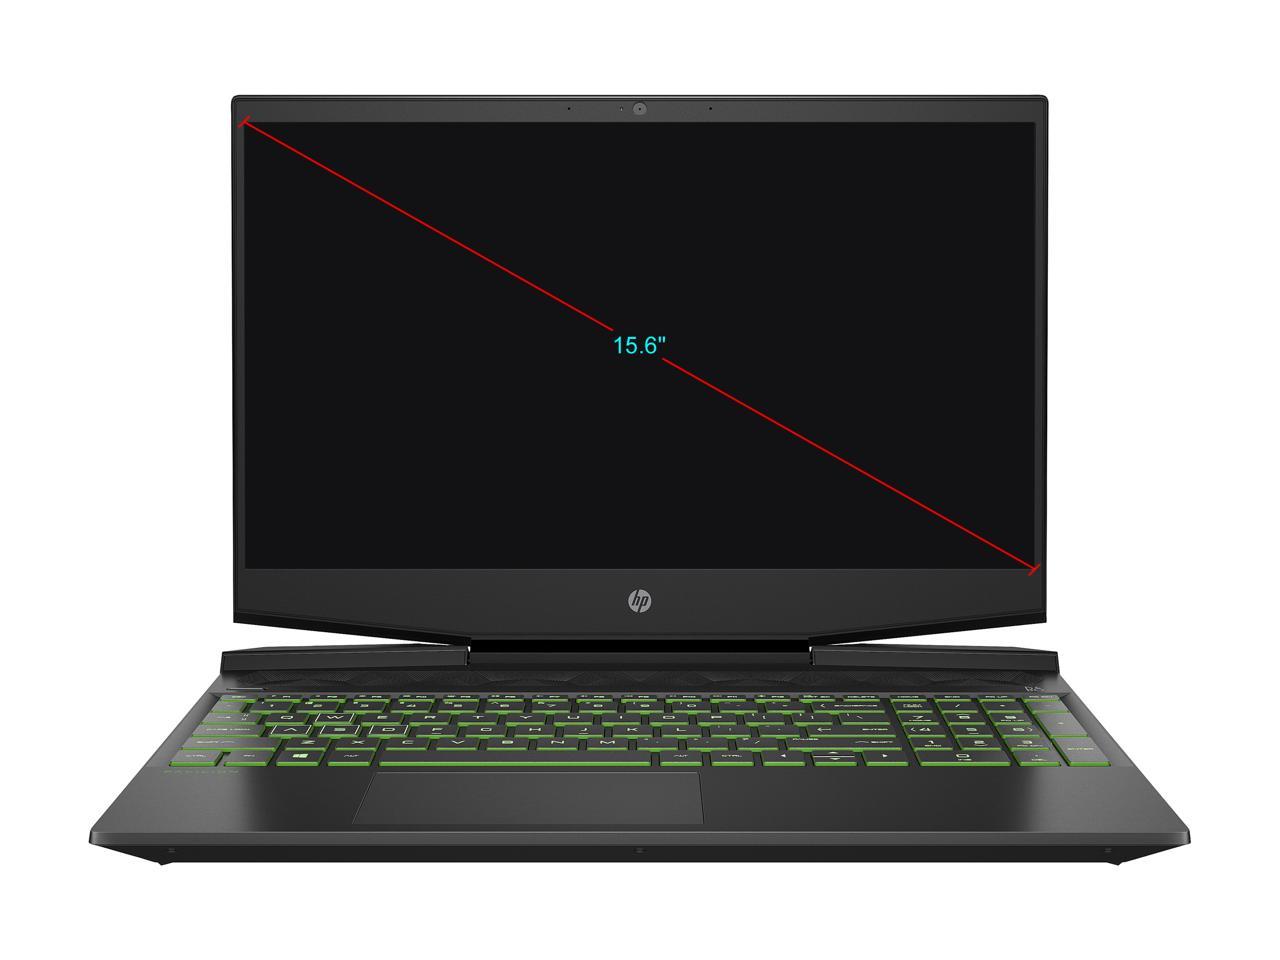 Nuchter reservering Riskeren HP 15-dk0010nr Gaming Laptop Intel Core i5-9300H 2.40 GHz 15.6" Windows 10  Home 64-bit - Newegg.com